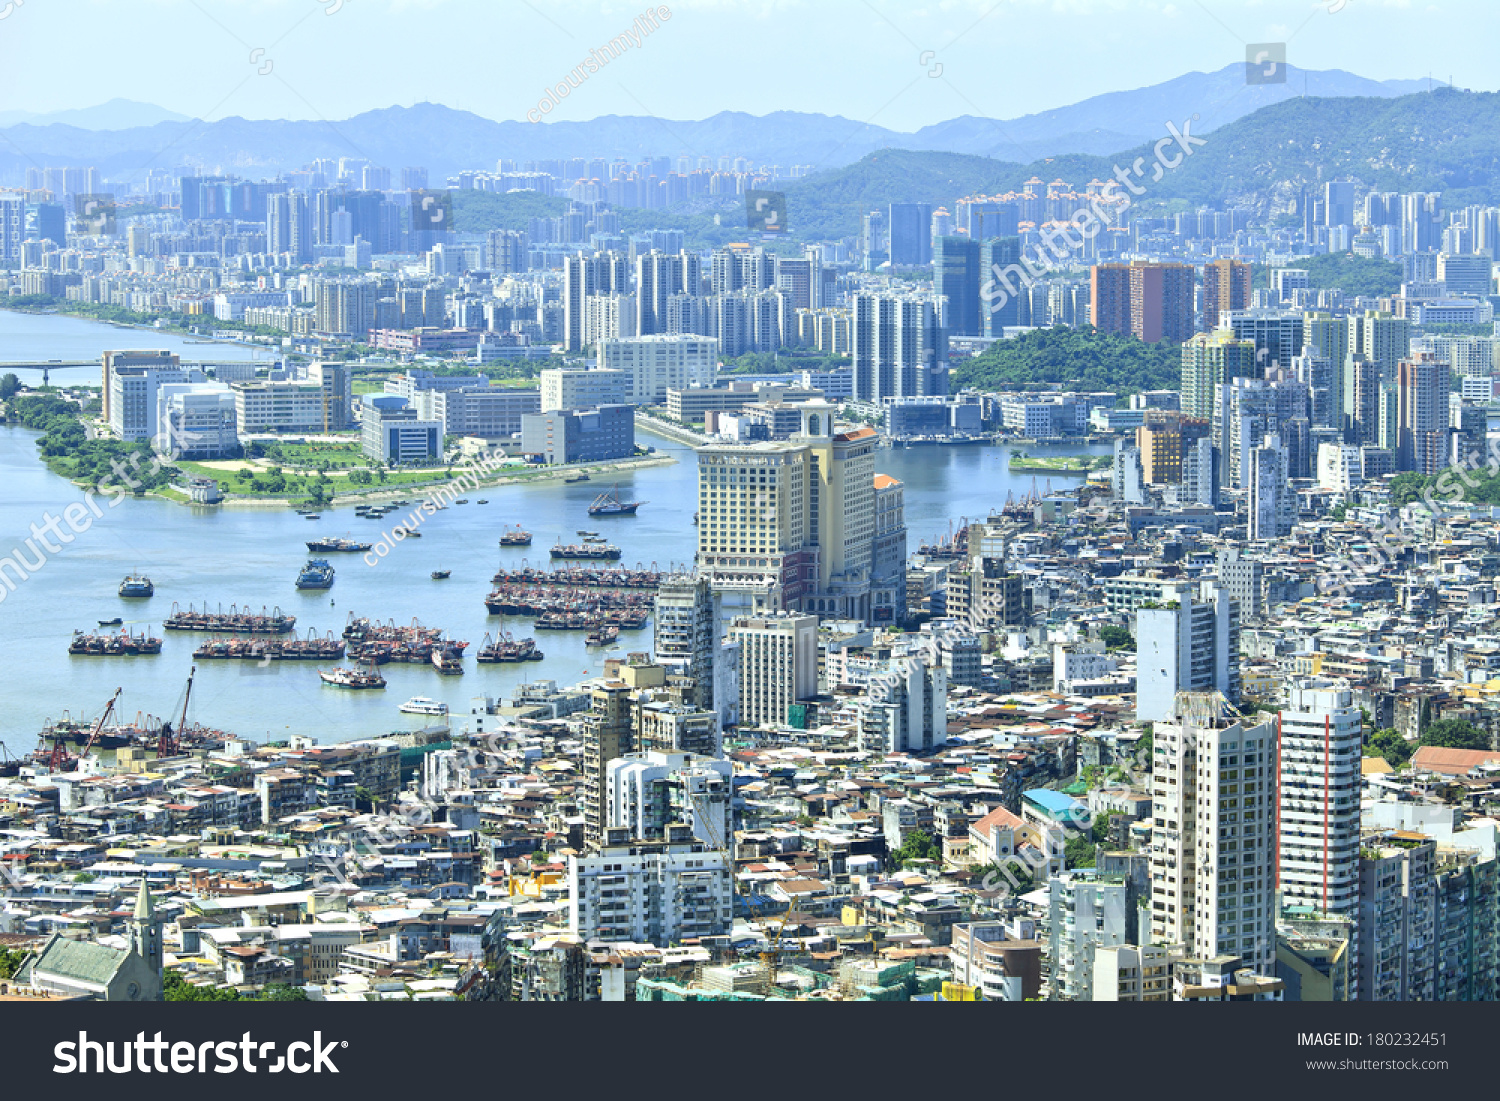 Macau Cityscape Stock Photo 180232451 - Shutterstock